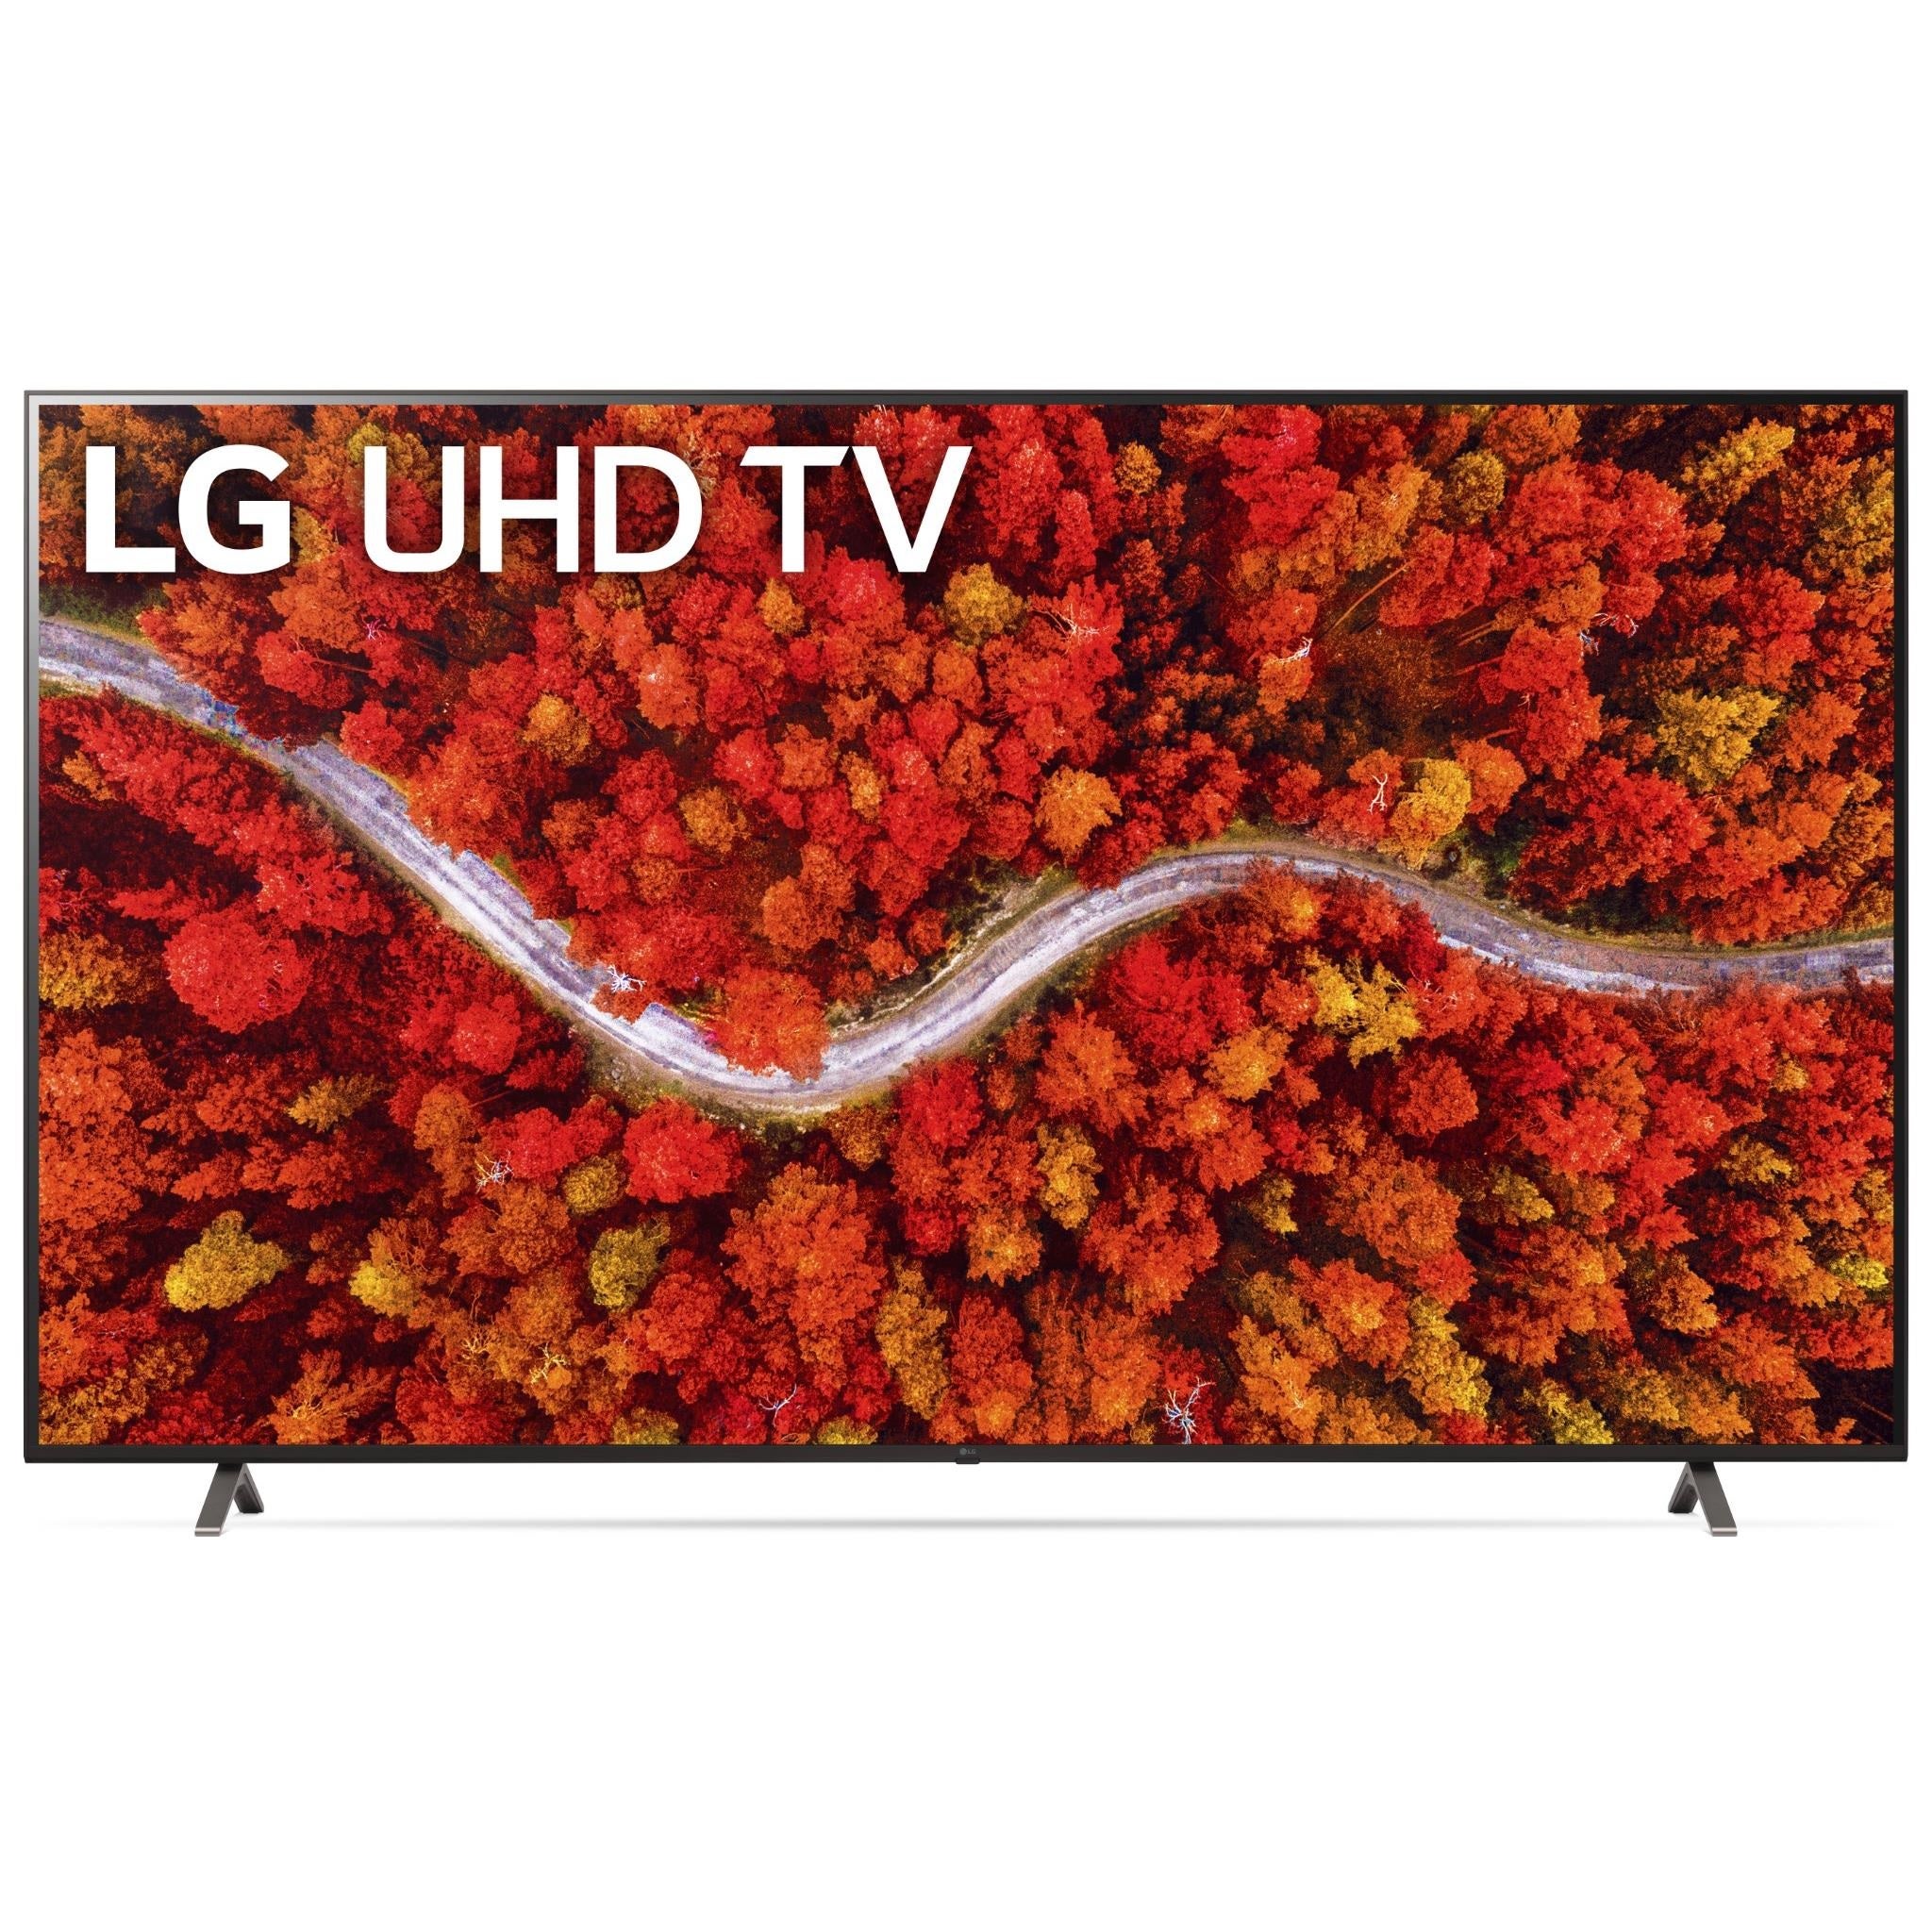 LG 43UP8000PTB 43inch UHD LED LCD TV